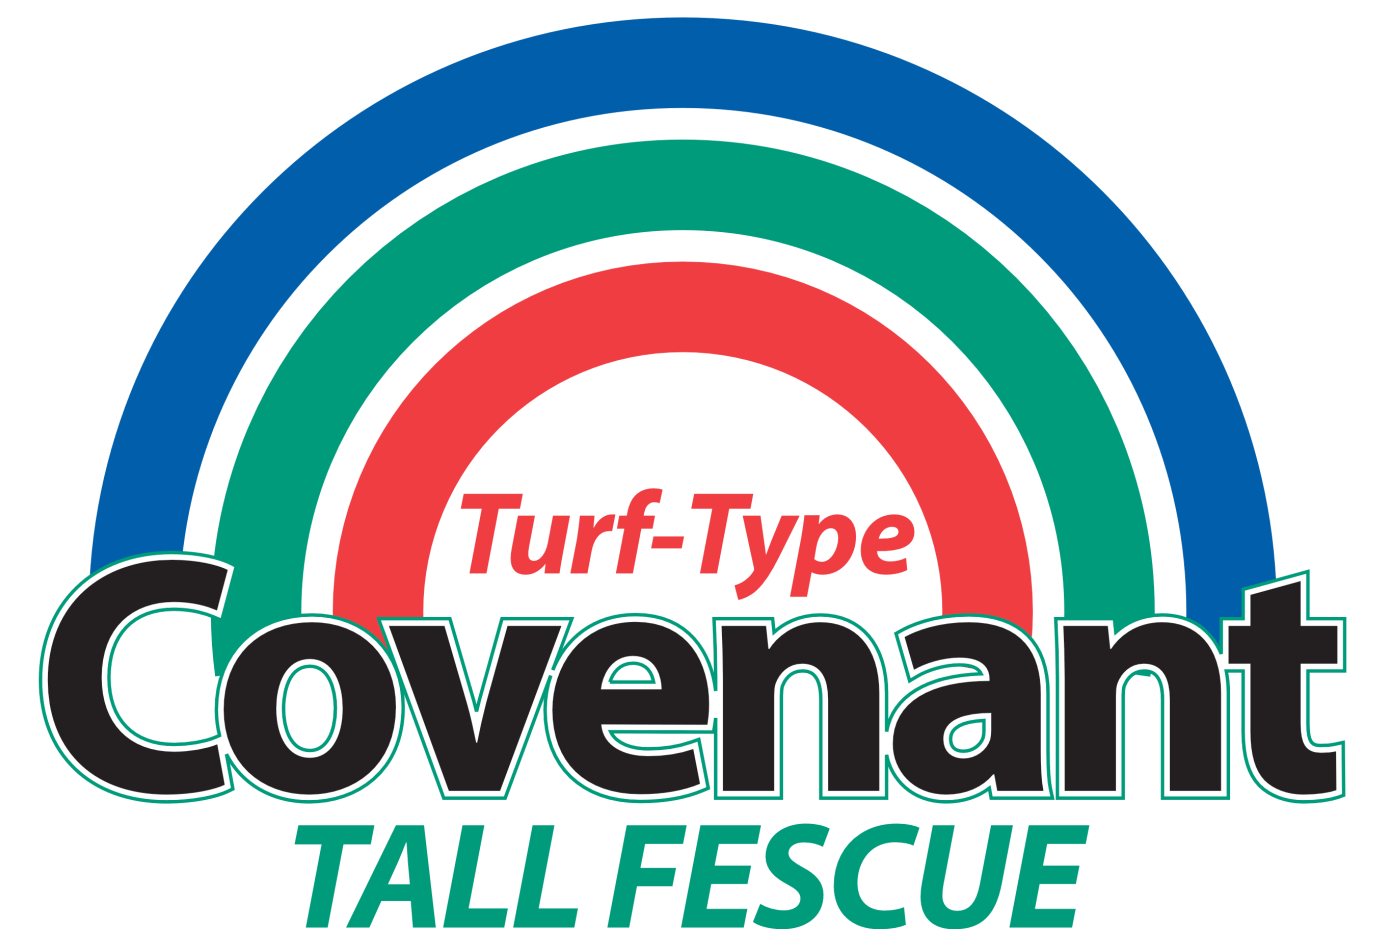 Covenant Turf-type tall fescue logo